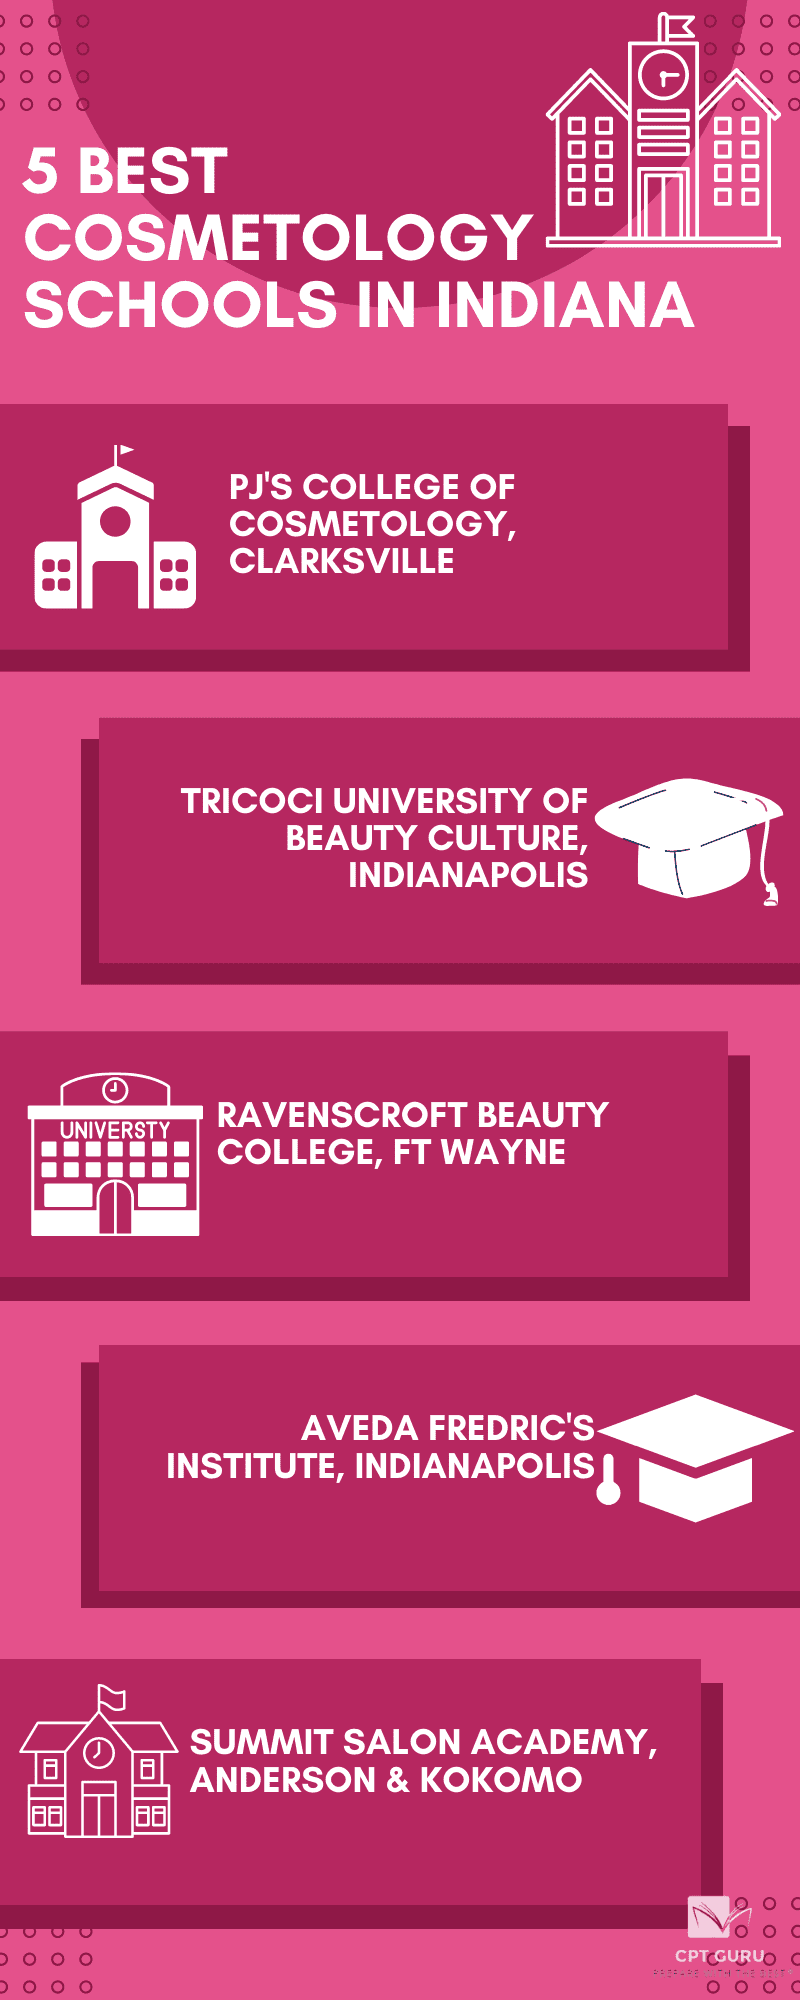 5 Best Cosmetology Schools in Indiana